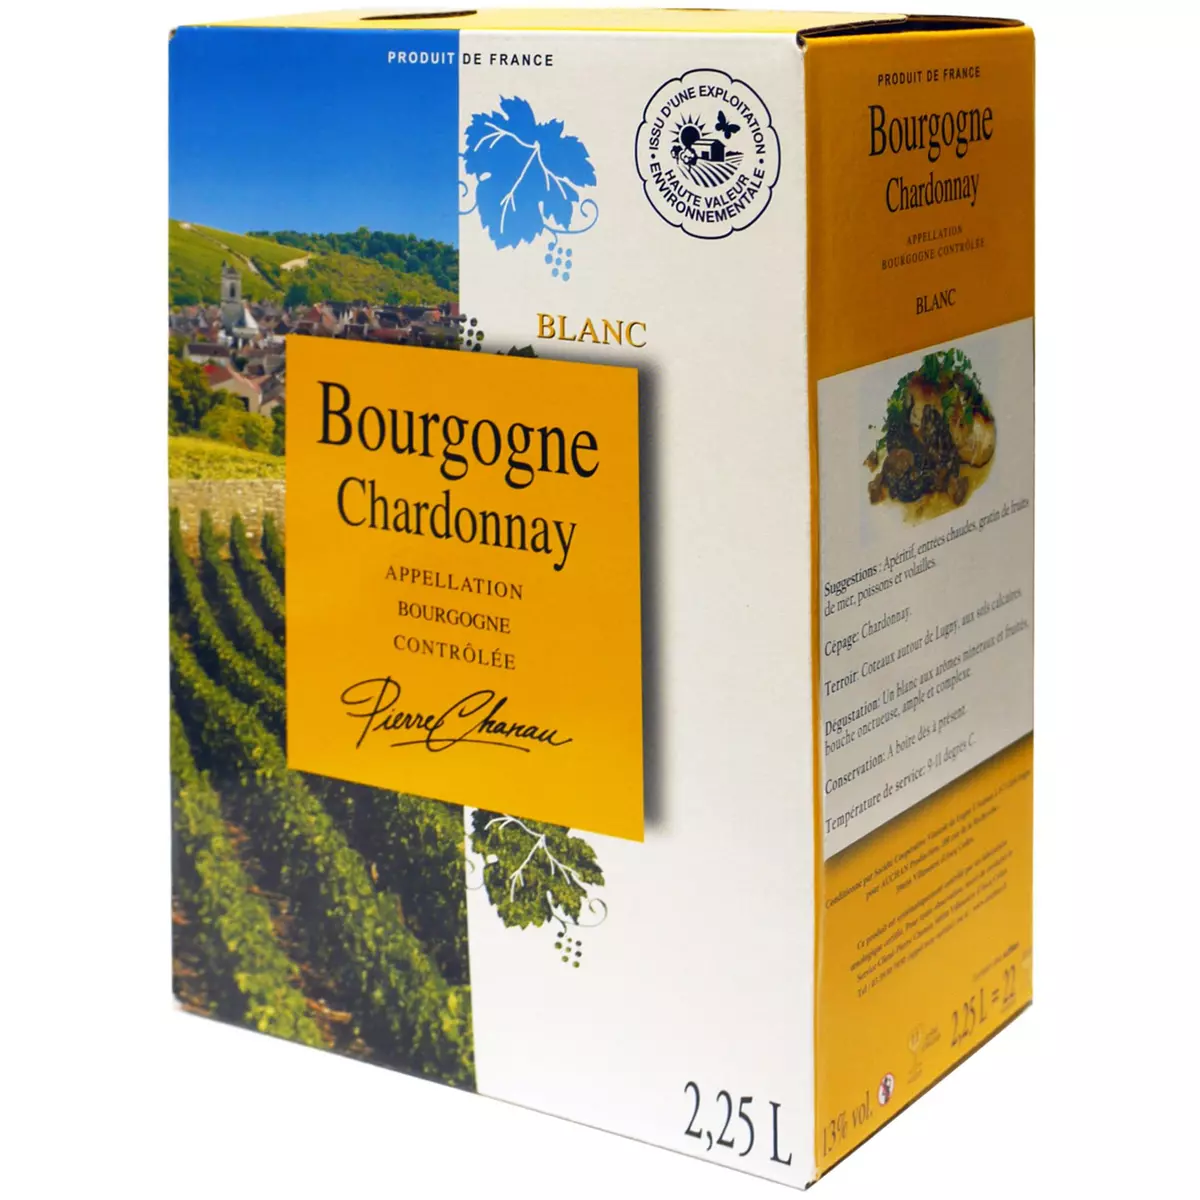 AOP Bourgogne chardonnay blanc bib 2.25l